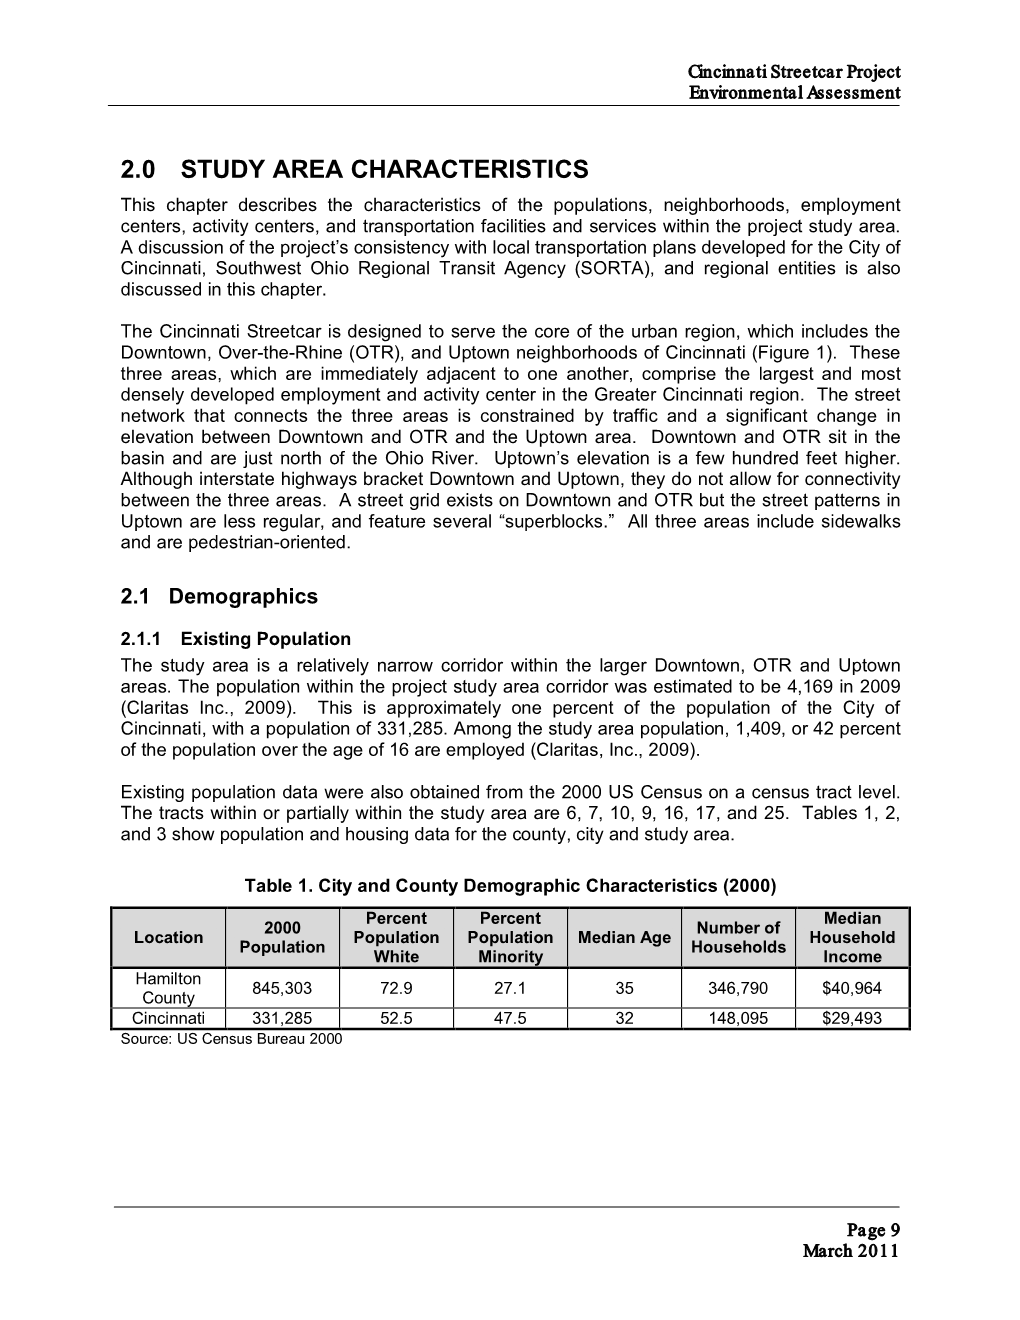 Section 2.0 Study Area Characteristics